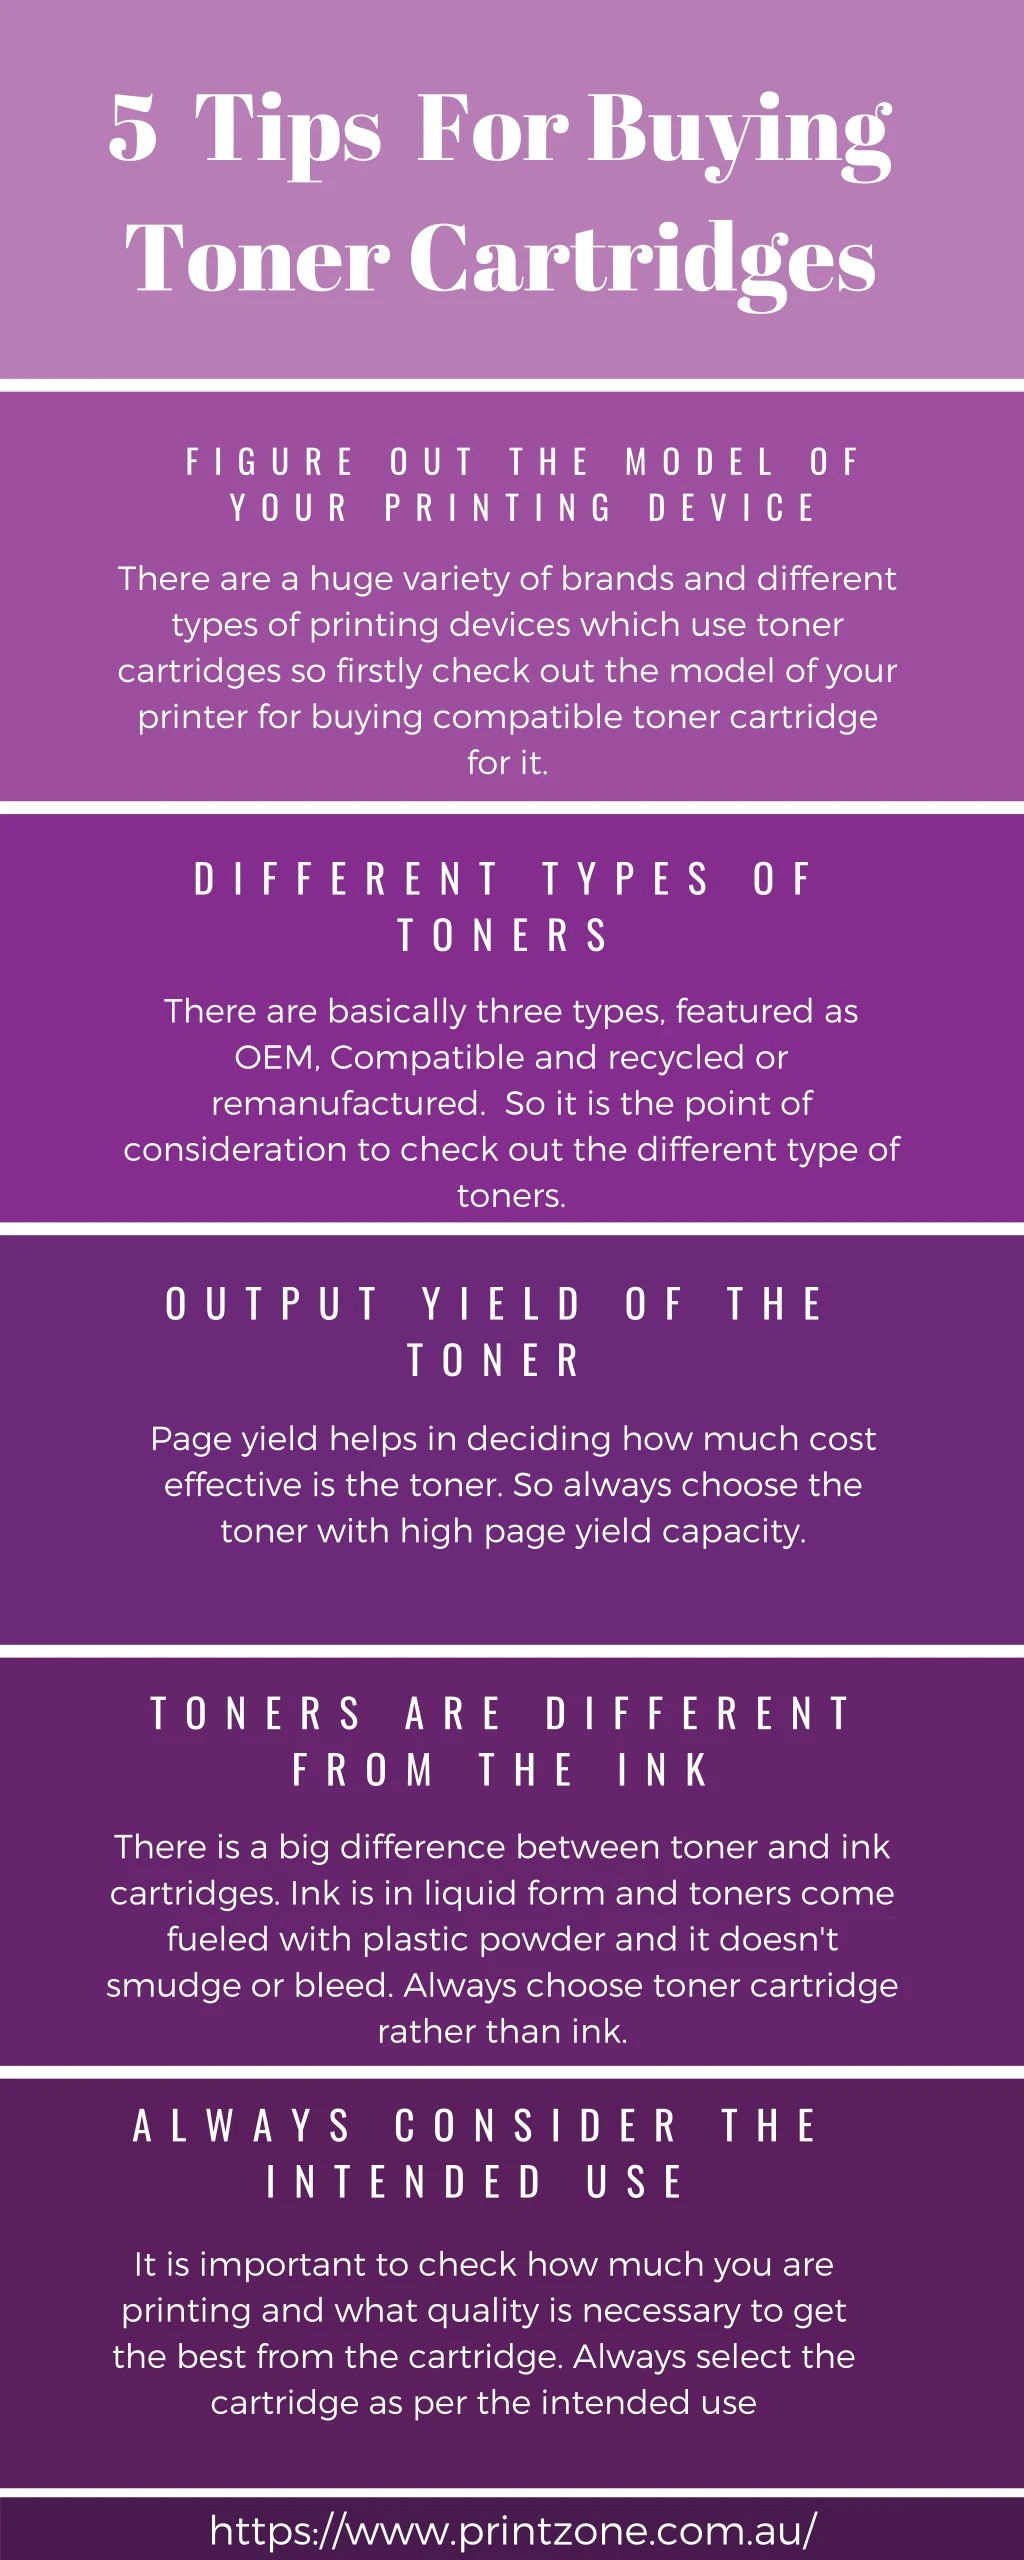 5 tips for buying toner cartridges